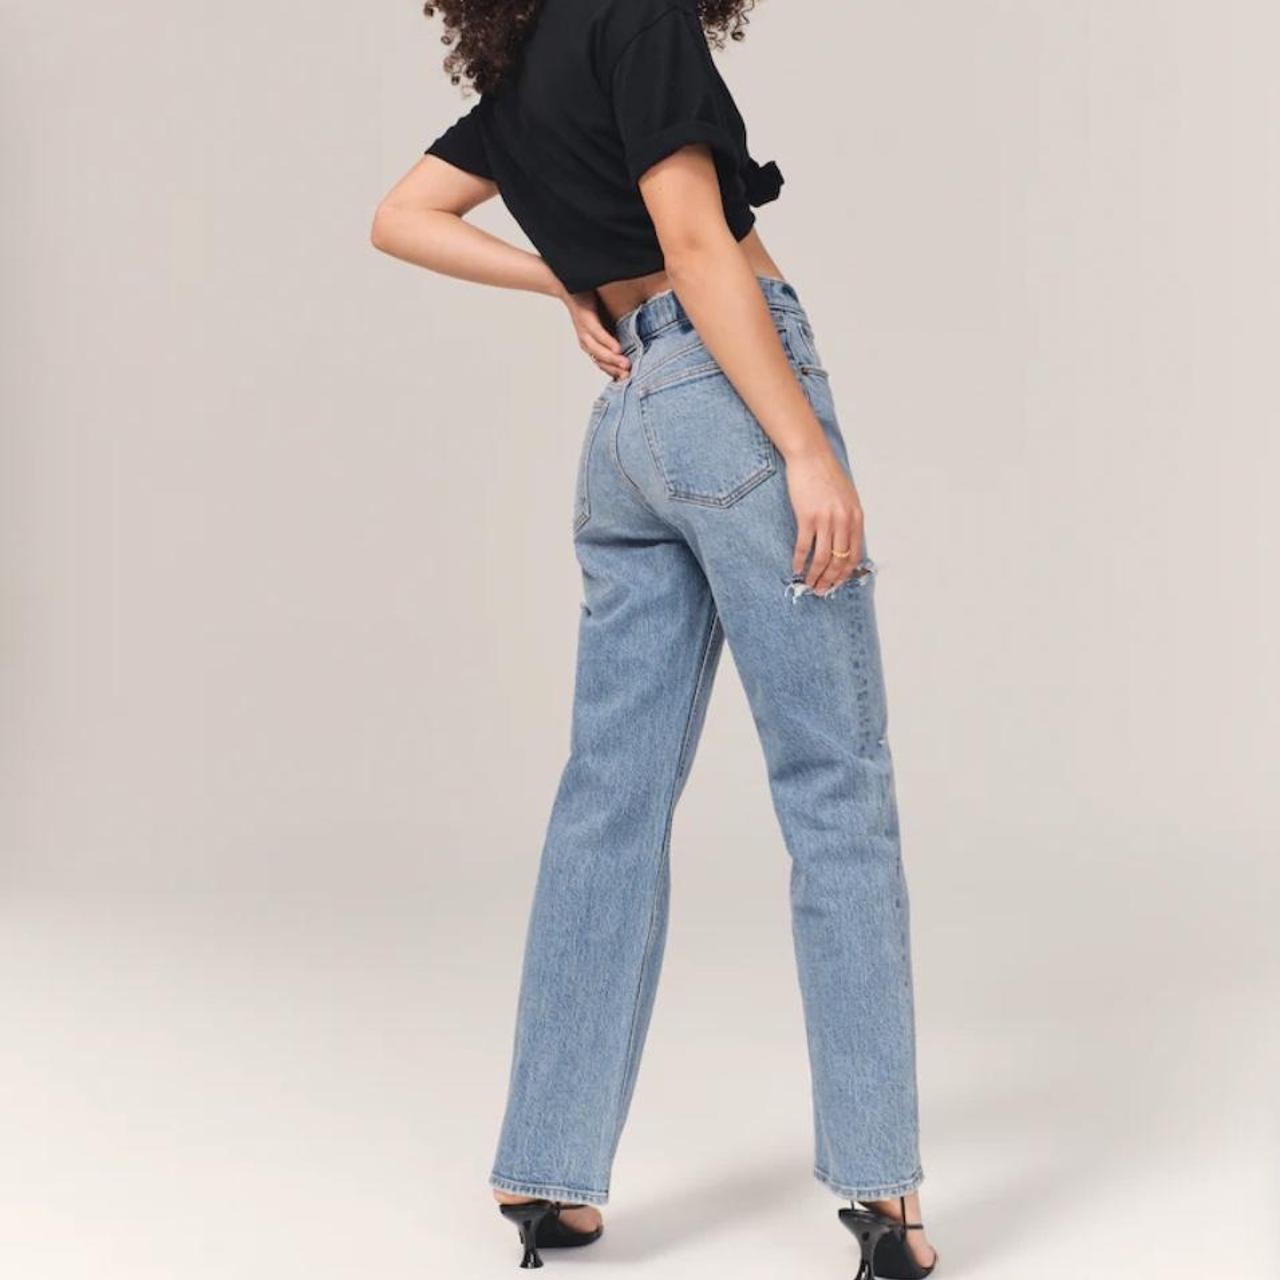 Abercrombie & Fitch Women's Blue Jeans